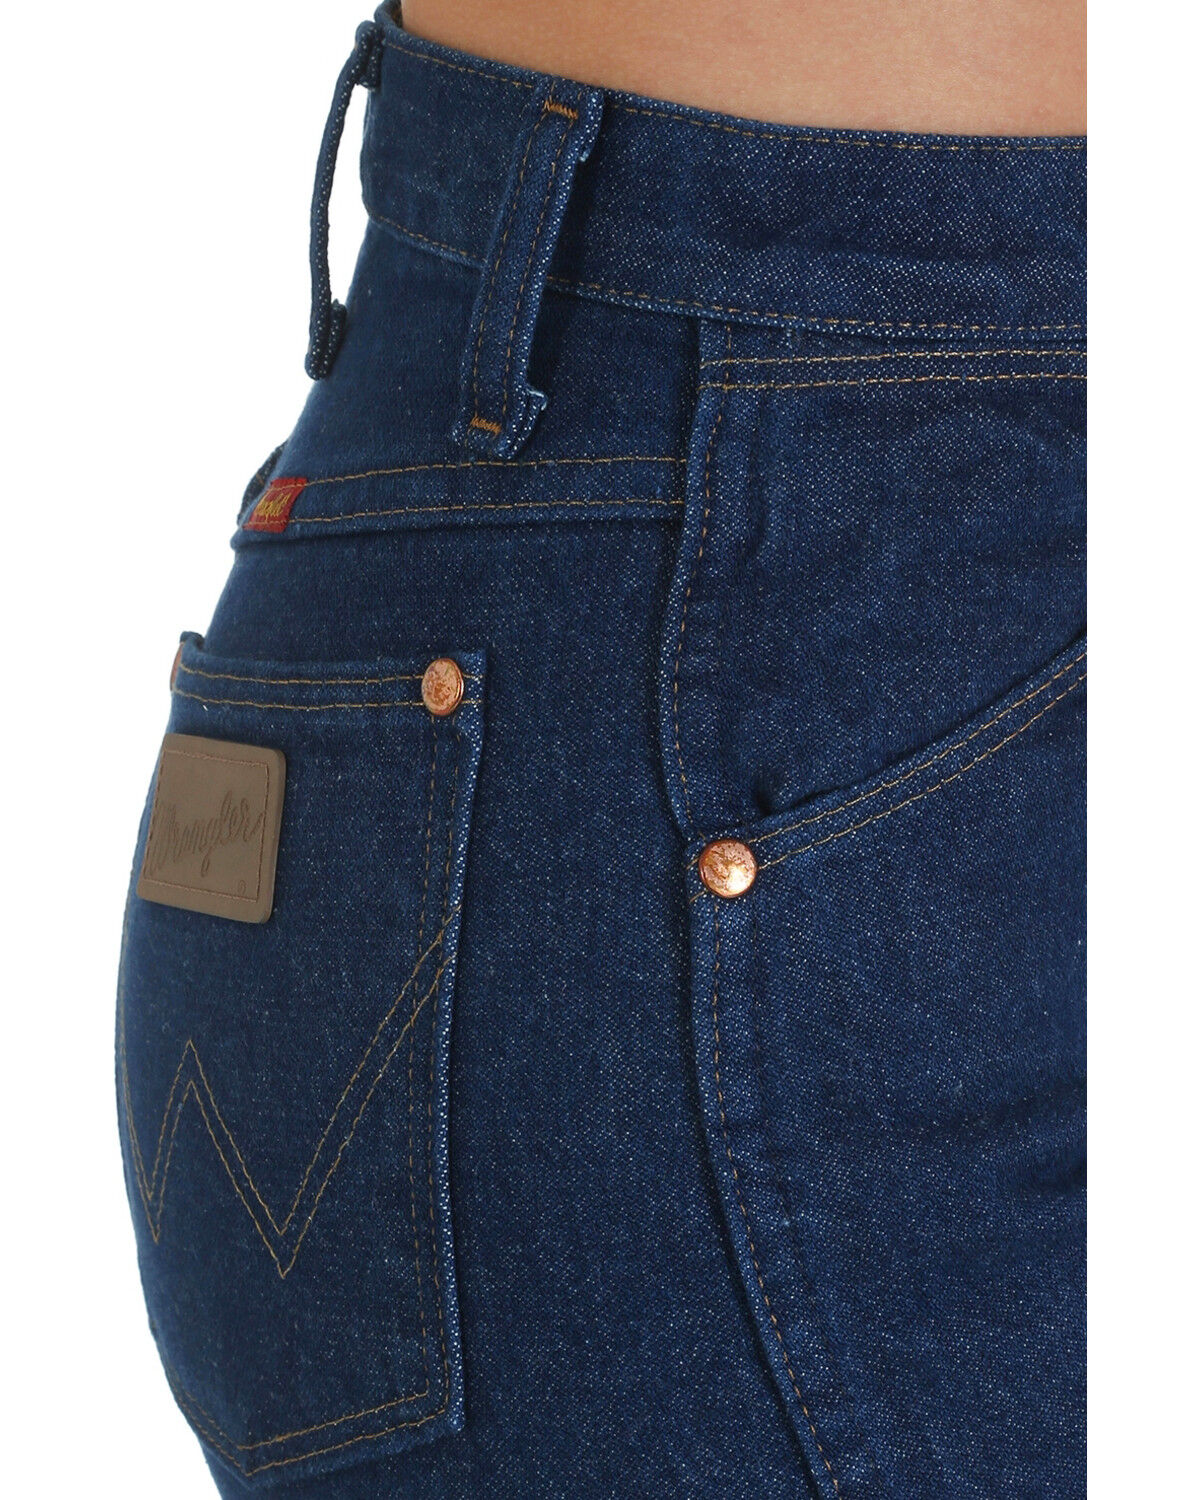 Wrangler Ladies Jeans Size Chart